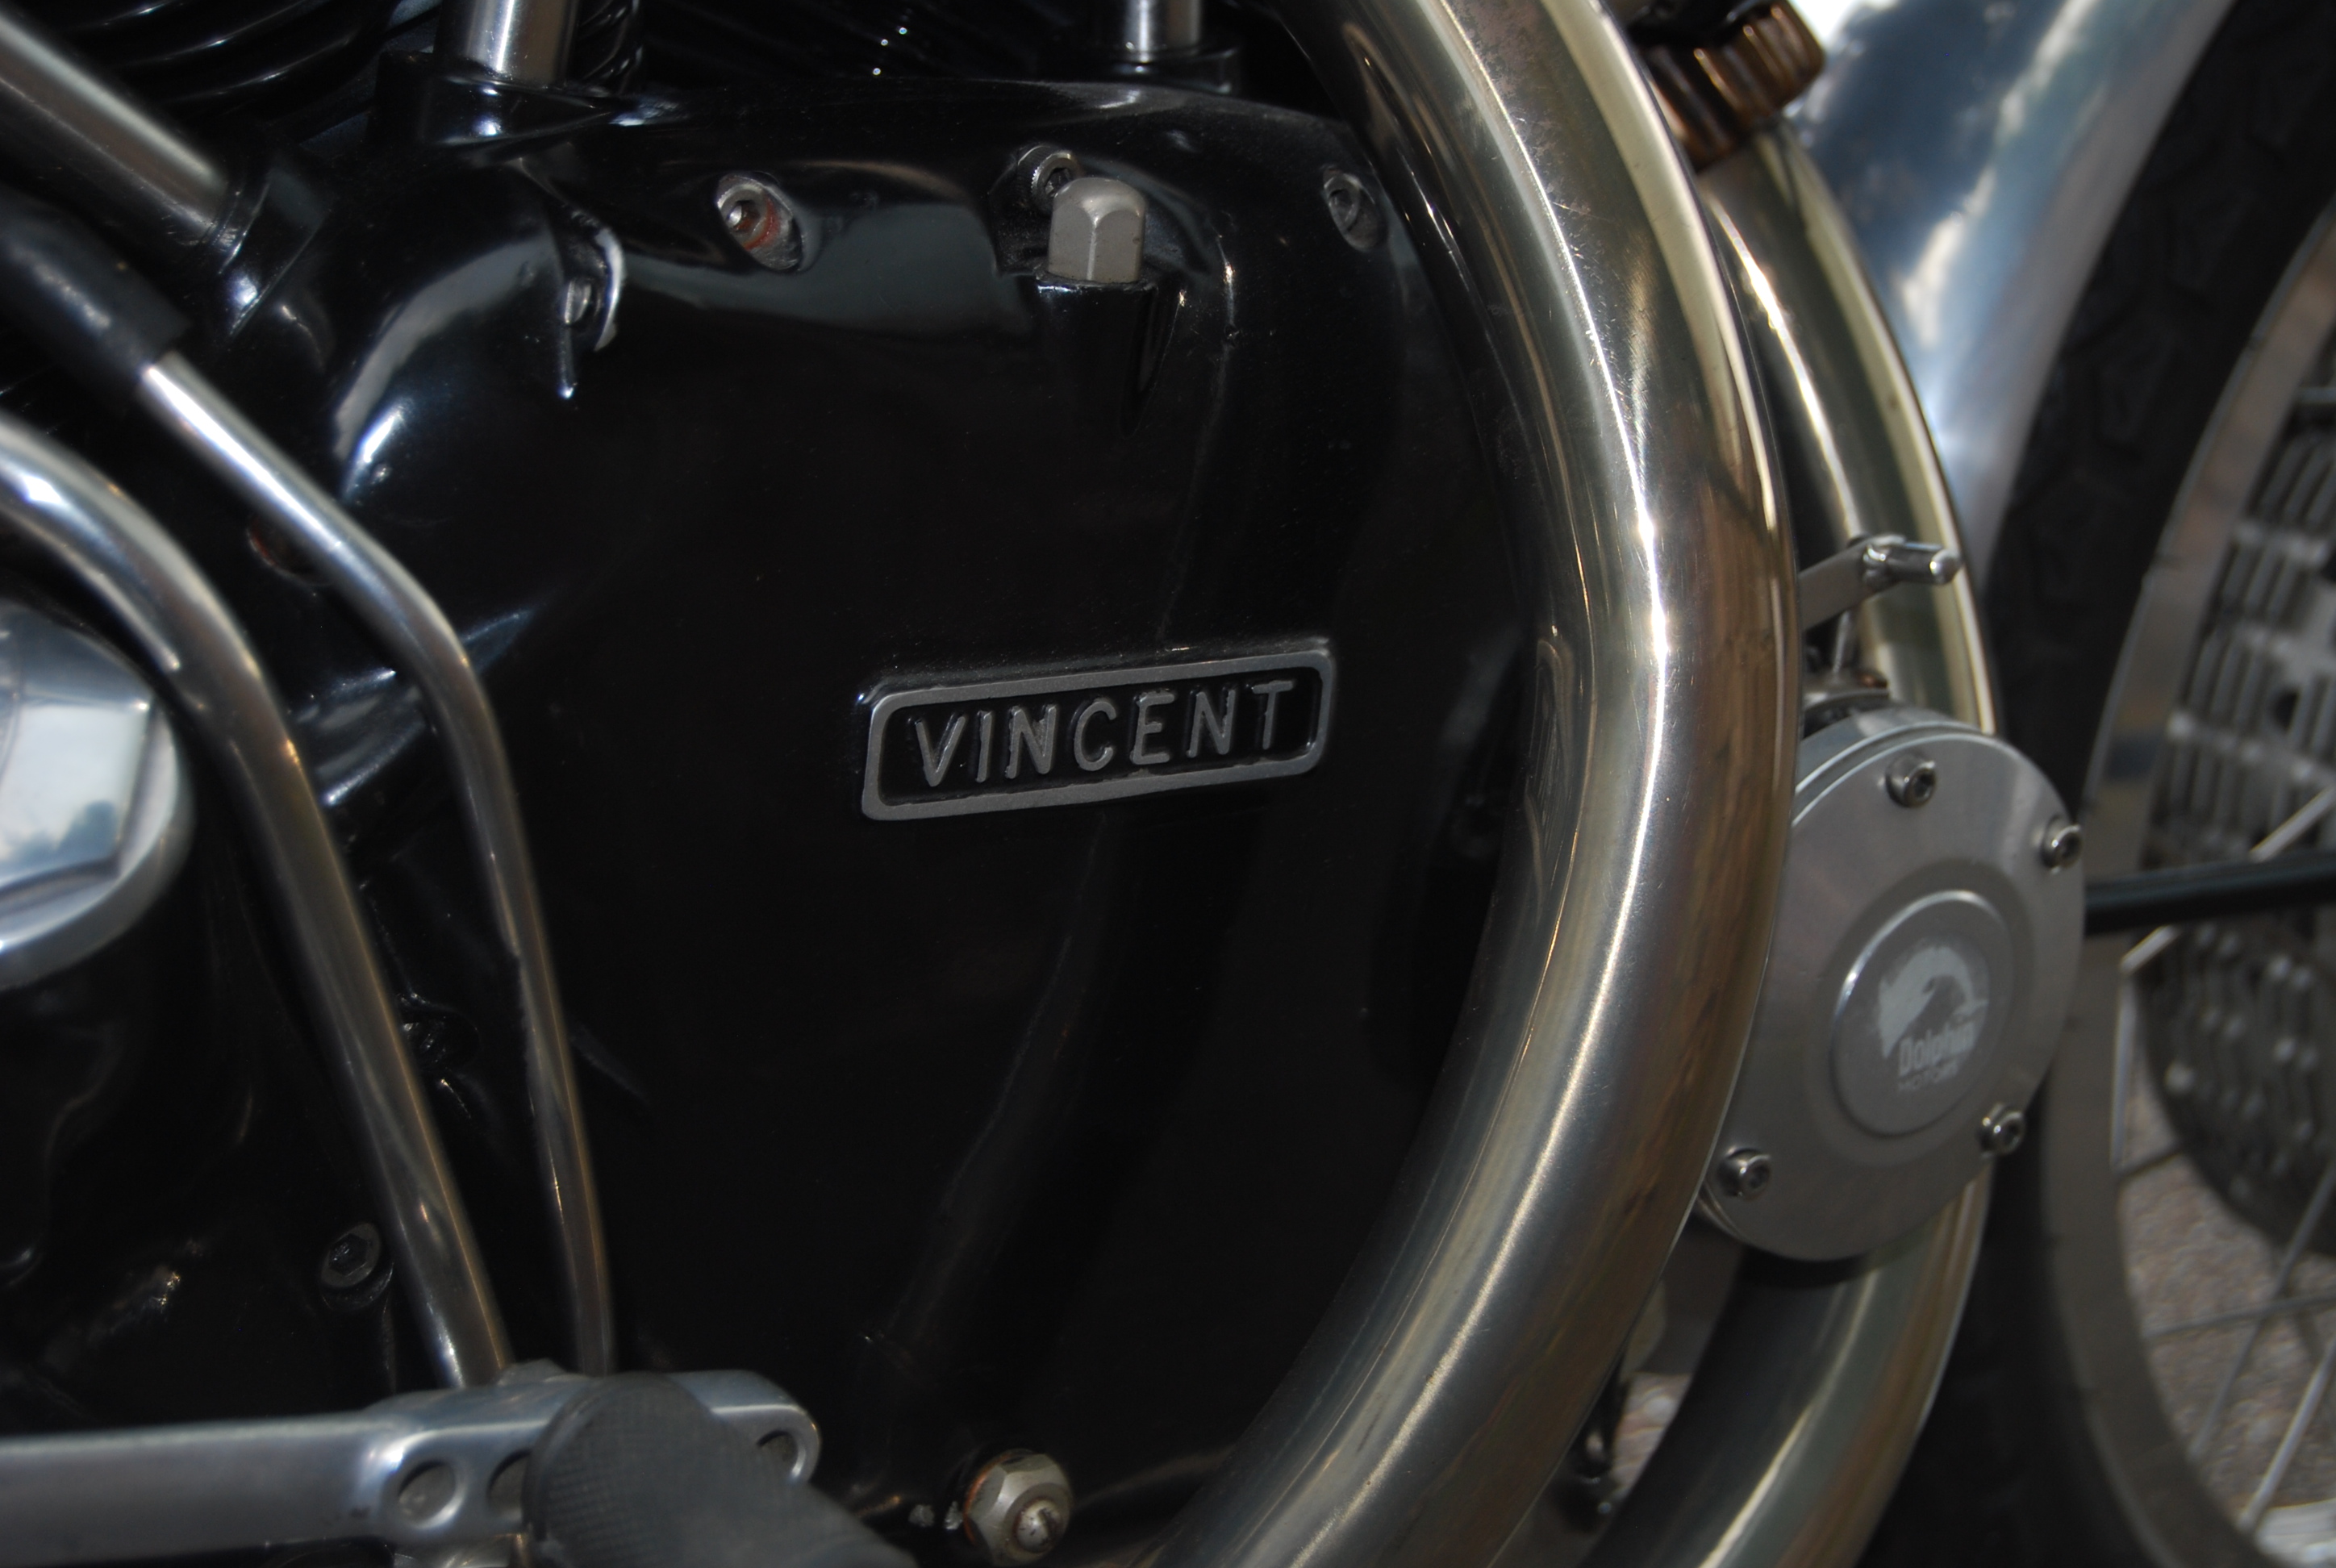 STUNNING 1954 VINCENT BLACK SHADOW 998cc MOTORCYCLE / MOTORBIKE - Image 15 of 32